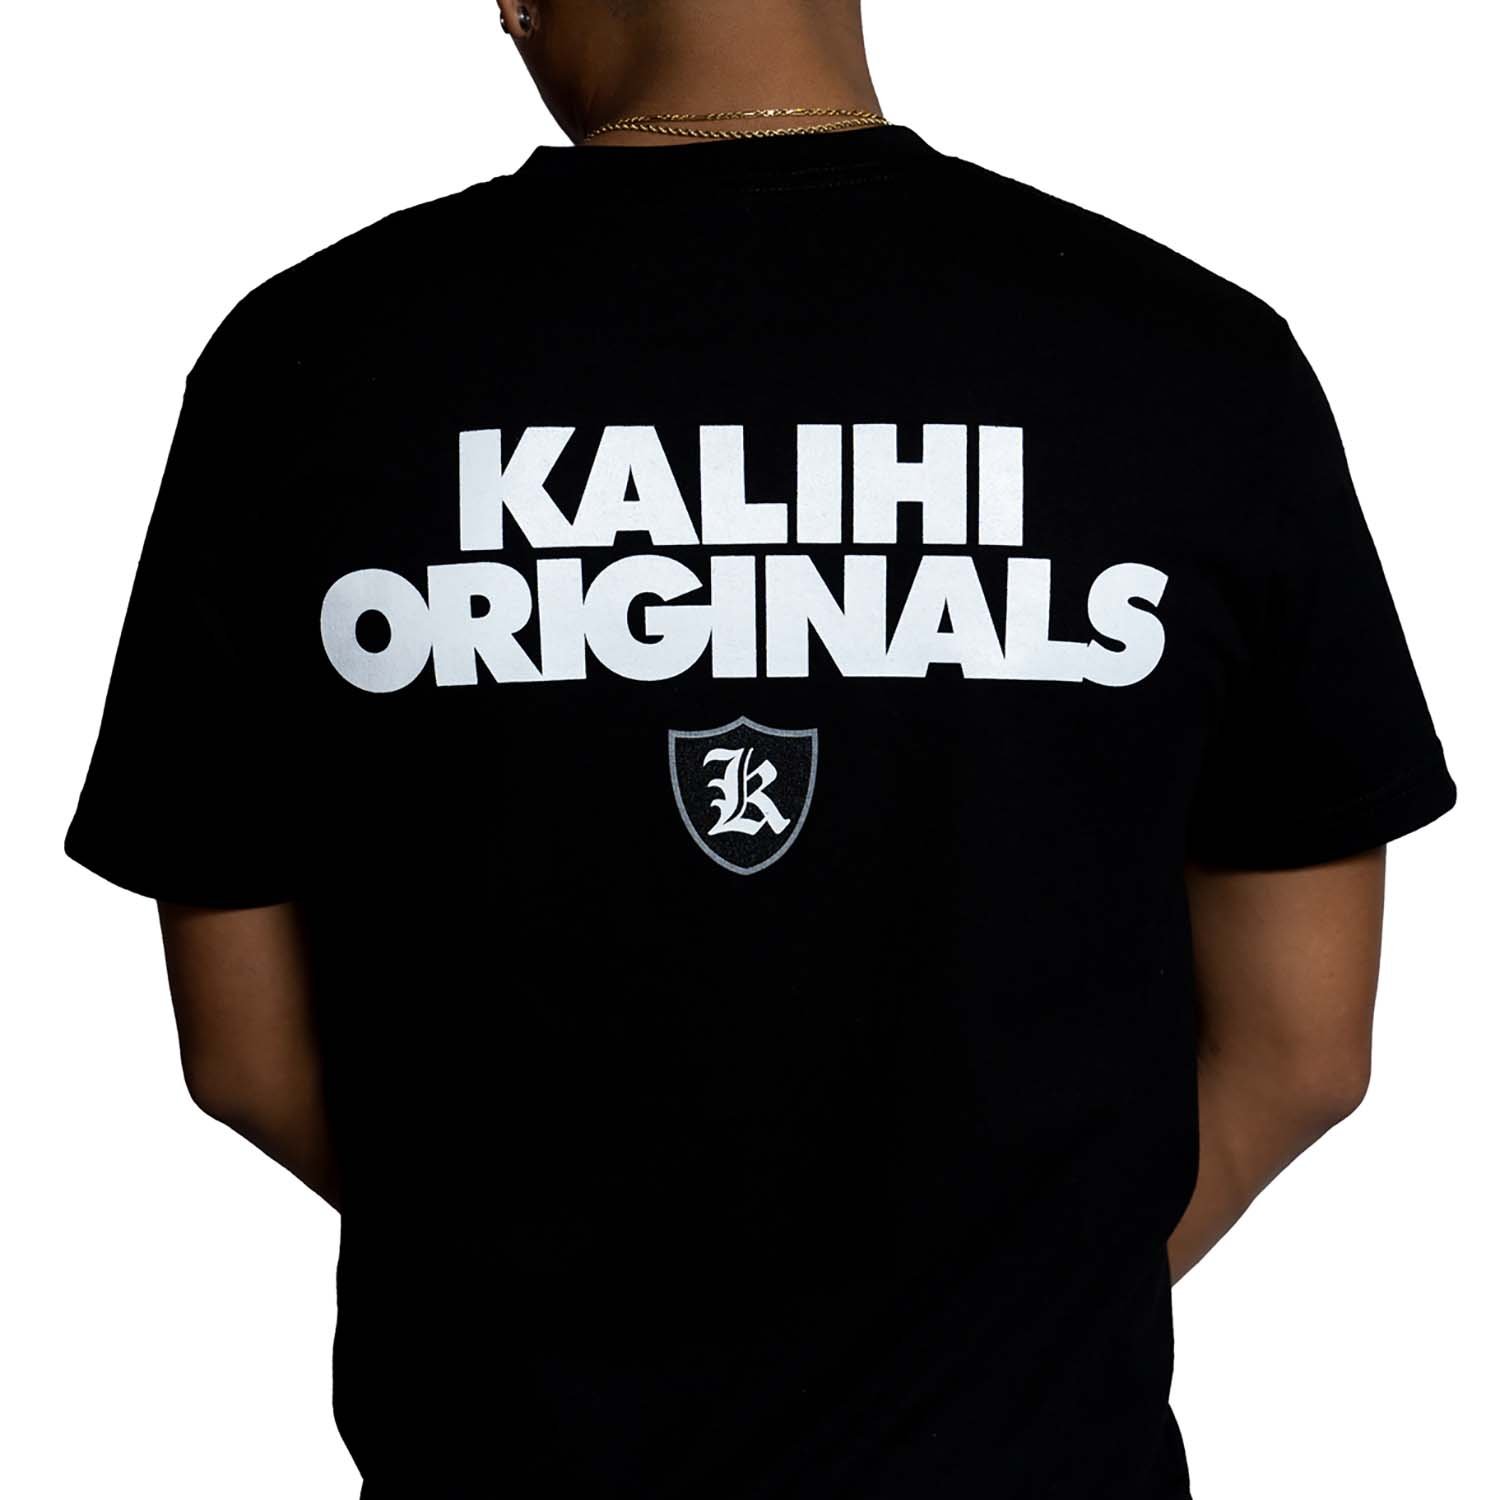 Kalihi Originals "Raiders" LIMITED ADDICTION